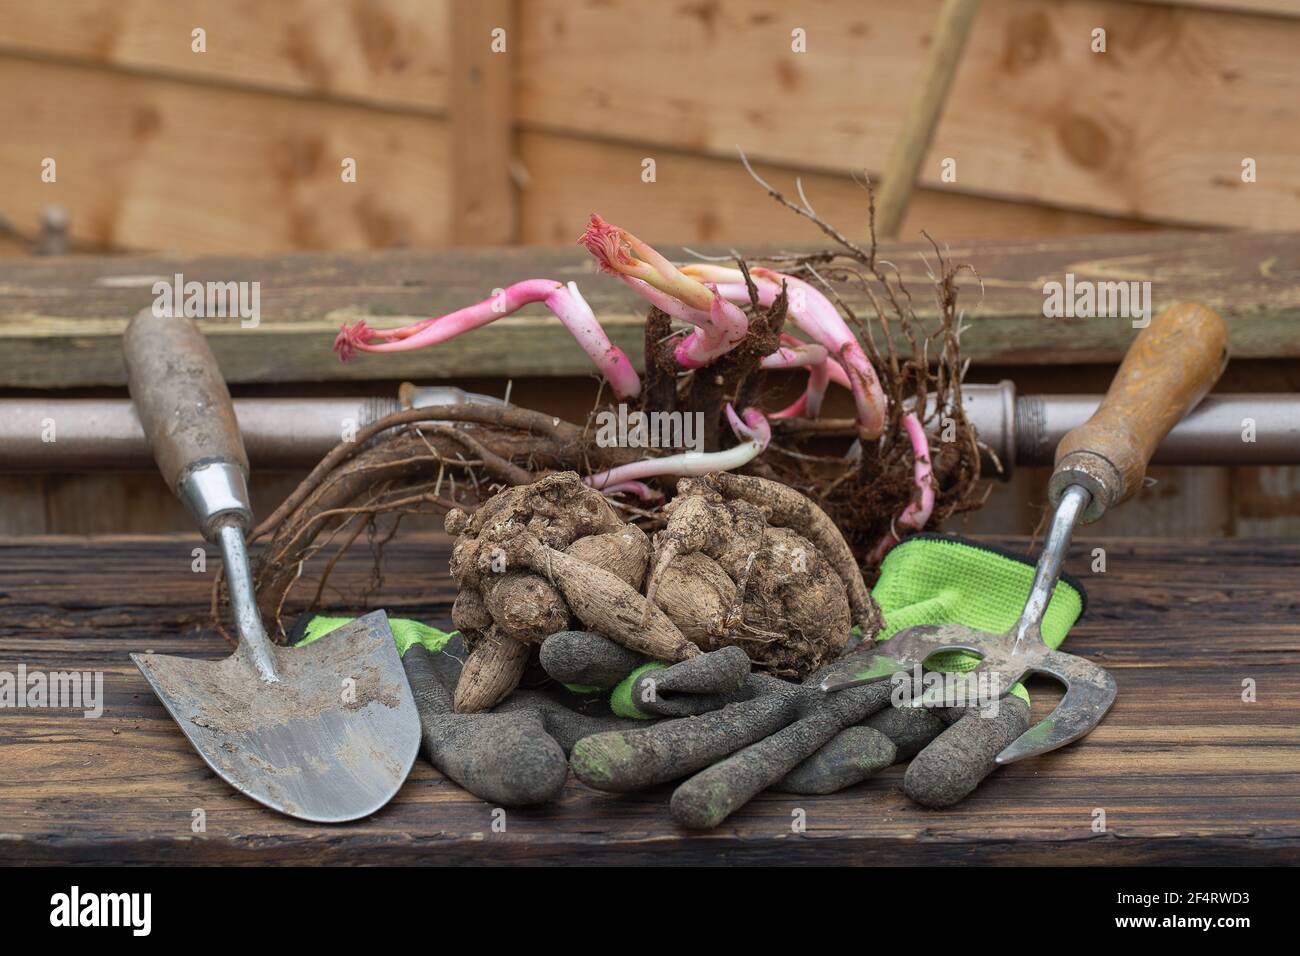 Dahlia tubers and itoh peony bartzella roots ready for planting Stock Photo